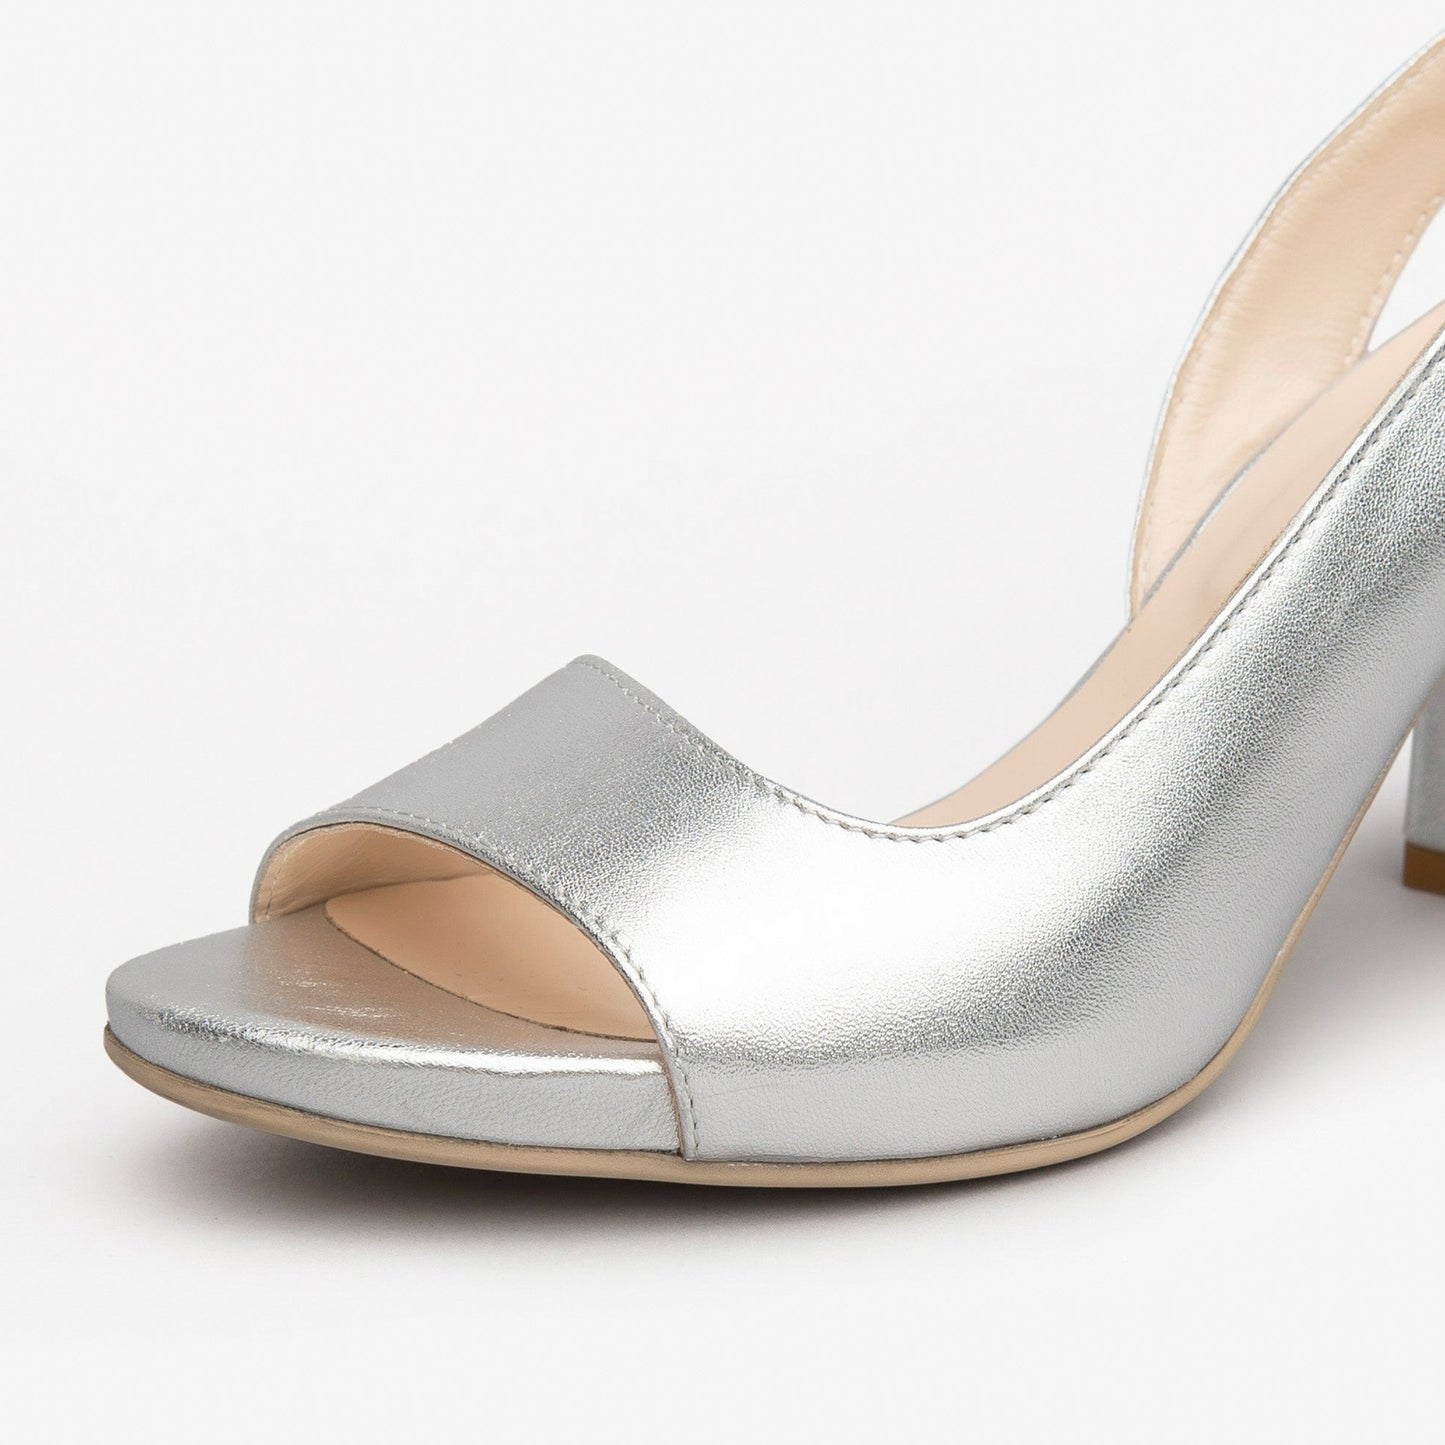 Sandals NeroGiardini women silver leather heels